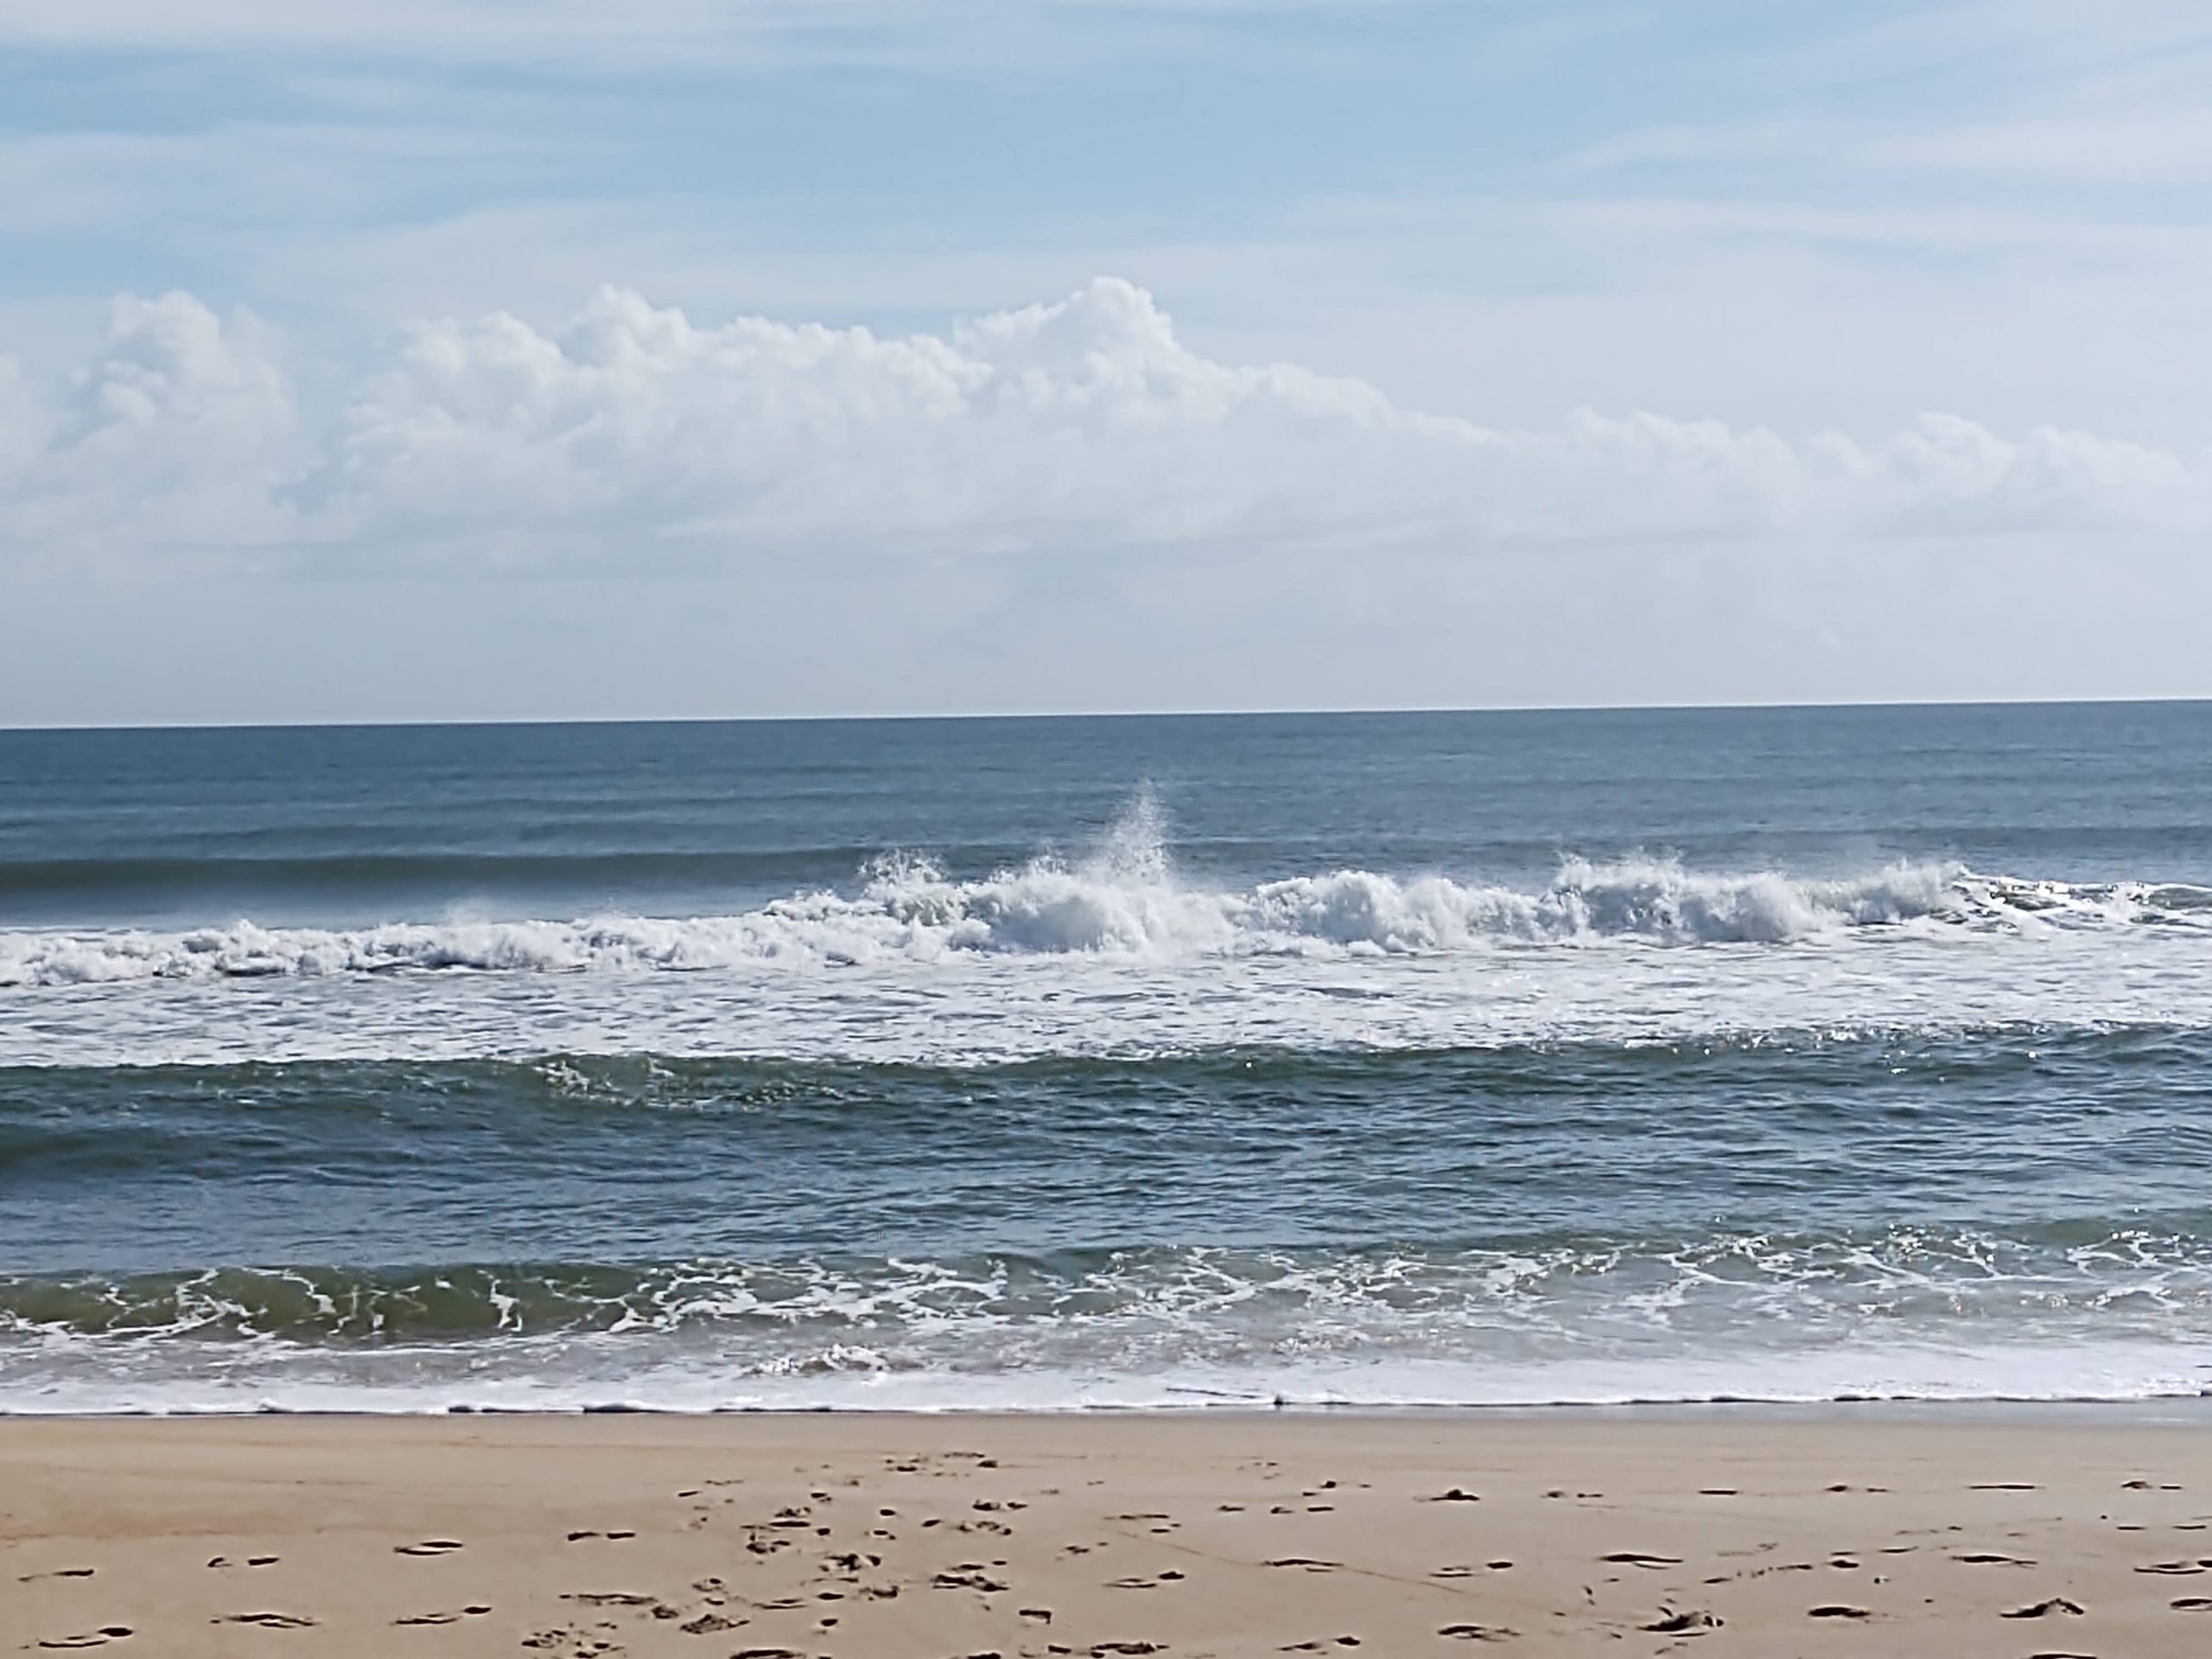 Image: Waves crashing on a beach